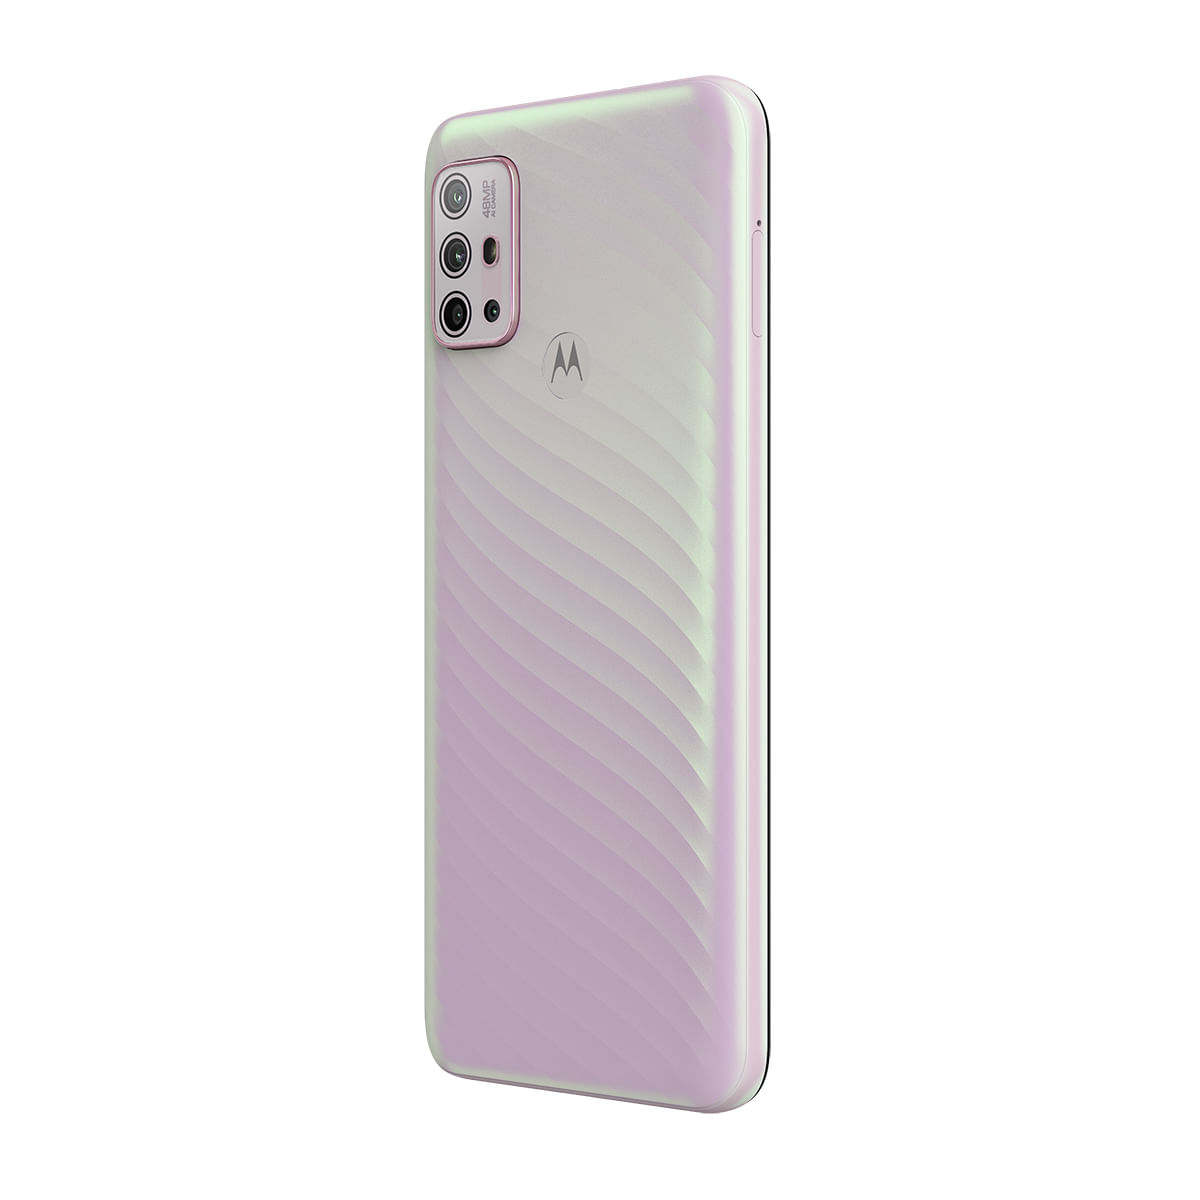 Smartphone Motorola Moto G10 64GB 4G Branco Floral 6,5” 48MP Traseira Direito